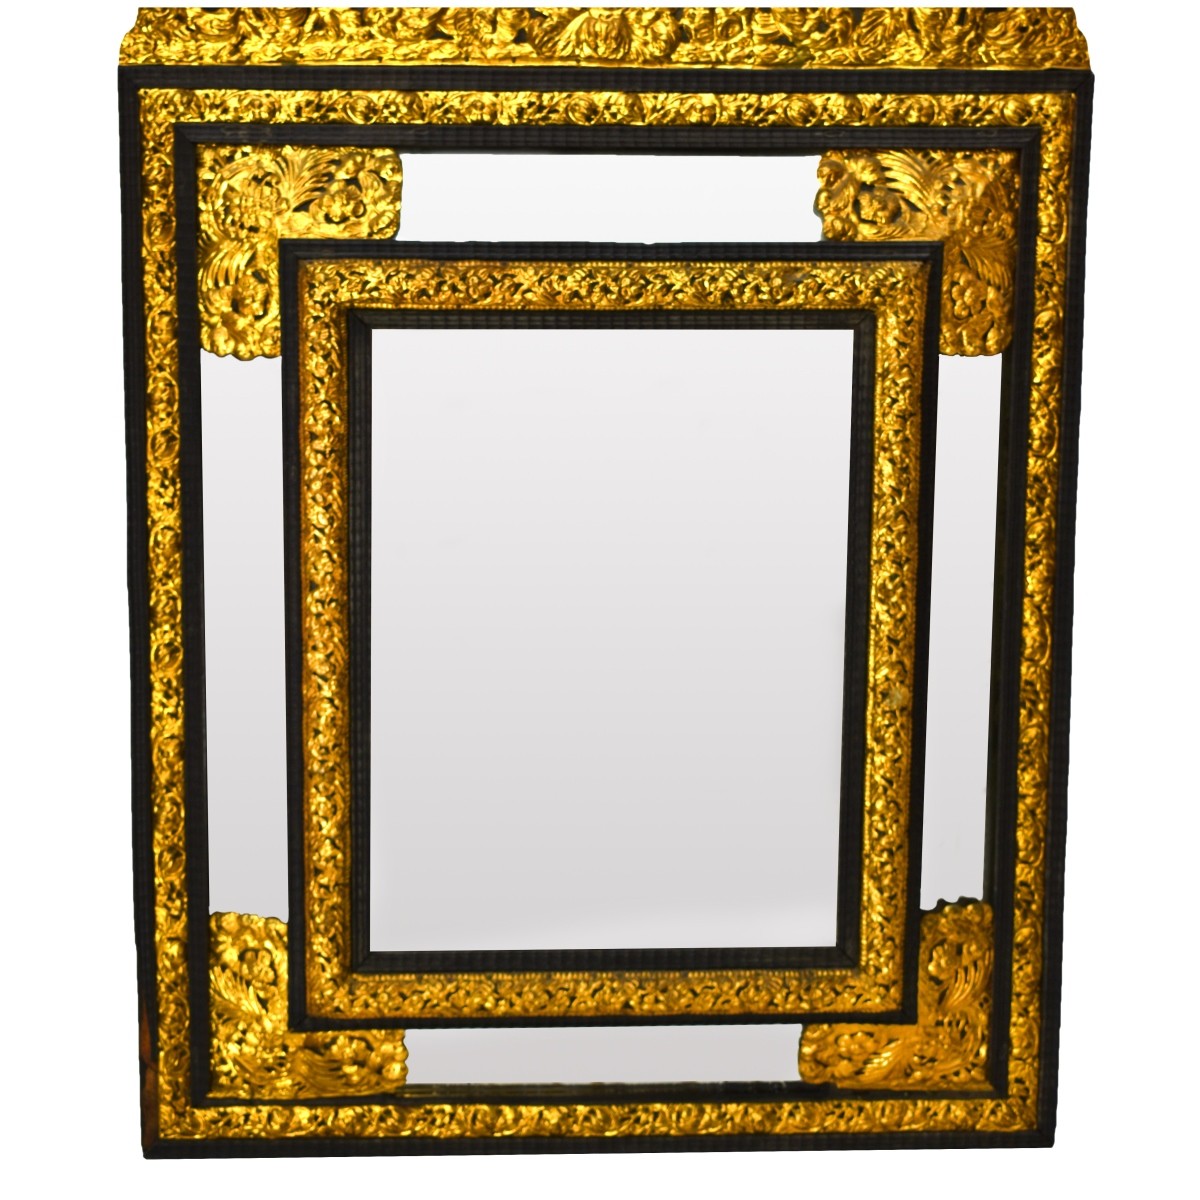 Large French Napoleon II Style Cushion Mirror